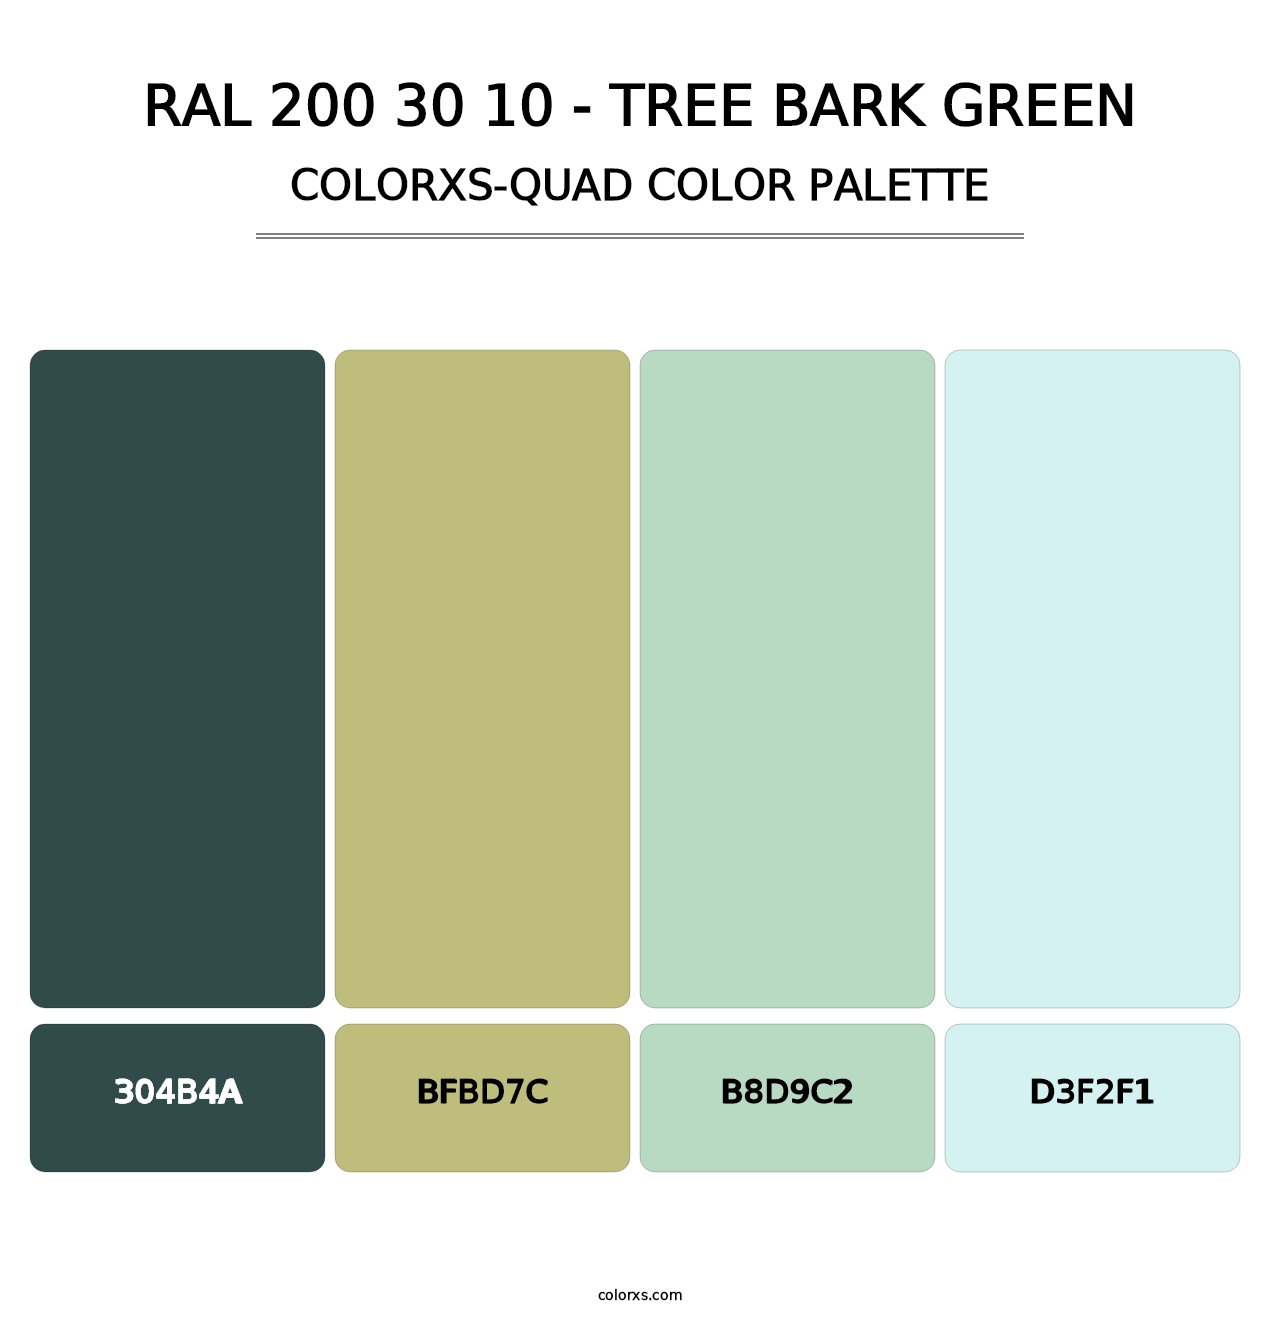 RAL 200 30 10 - Tree Bark Green - Colorxs Quad Palette